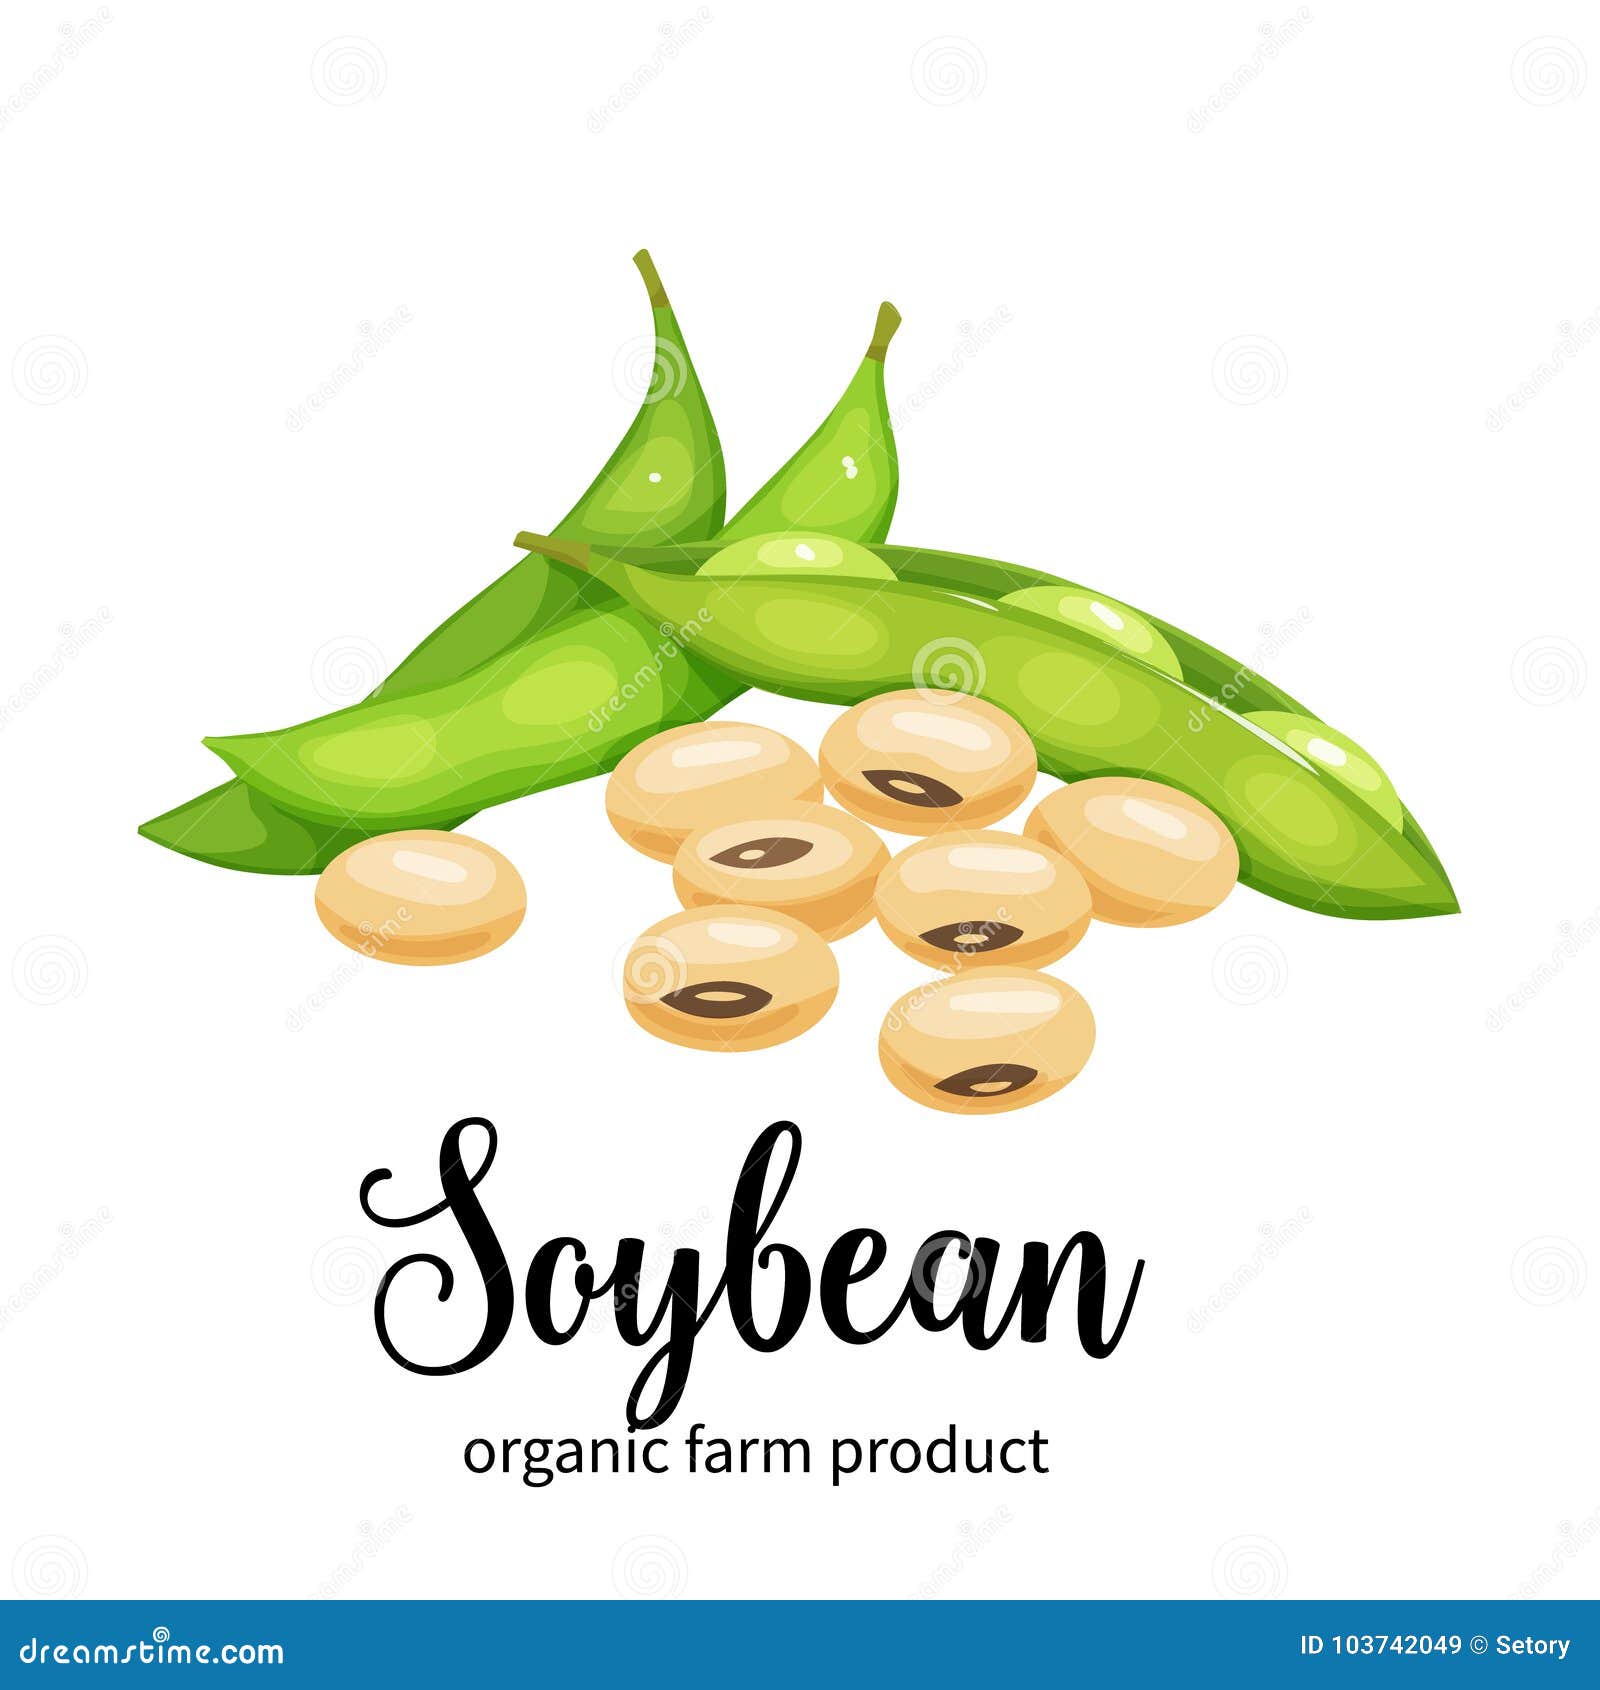 soybean in cartoon style